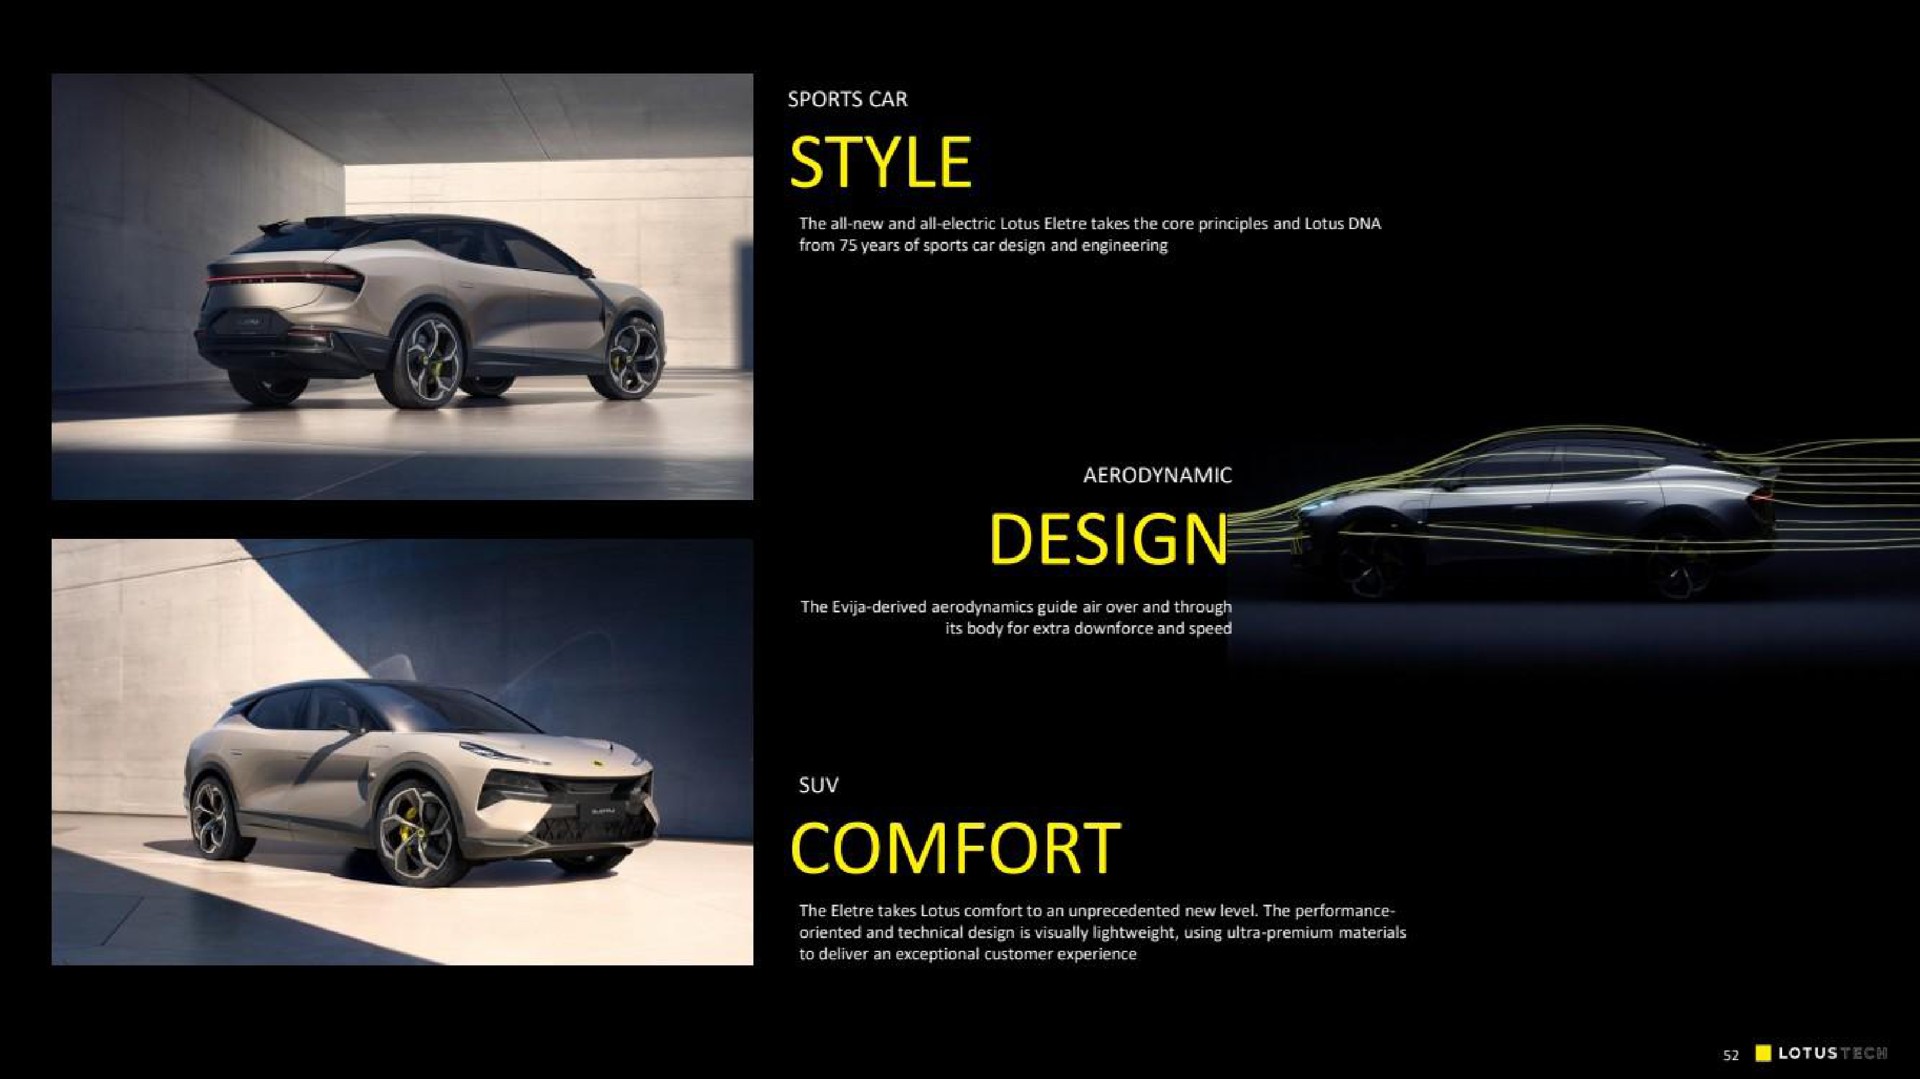 design comfort | Lotus Cars